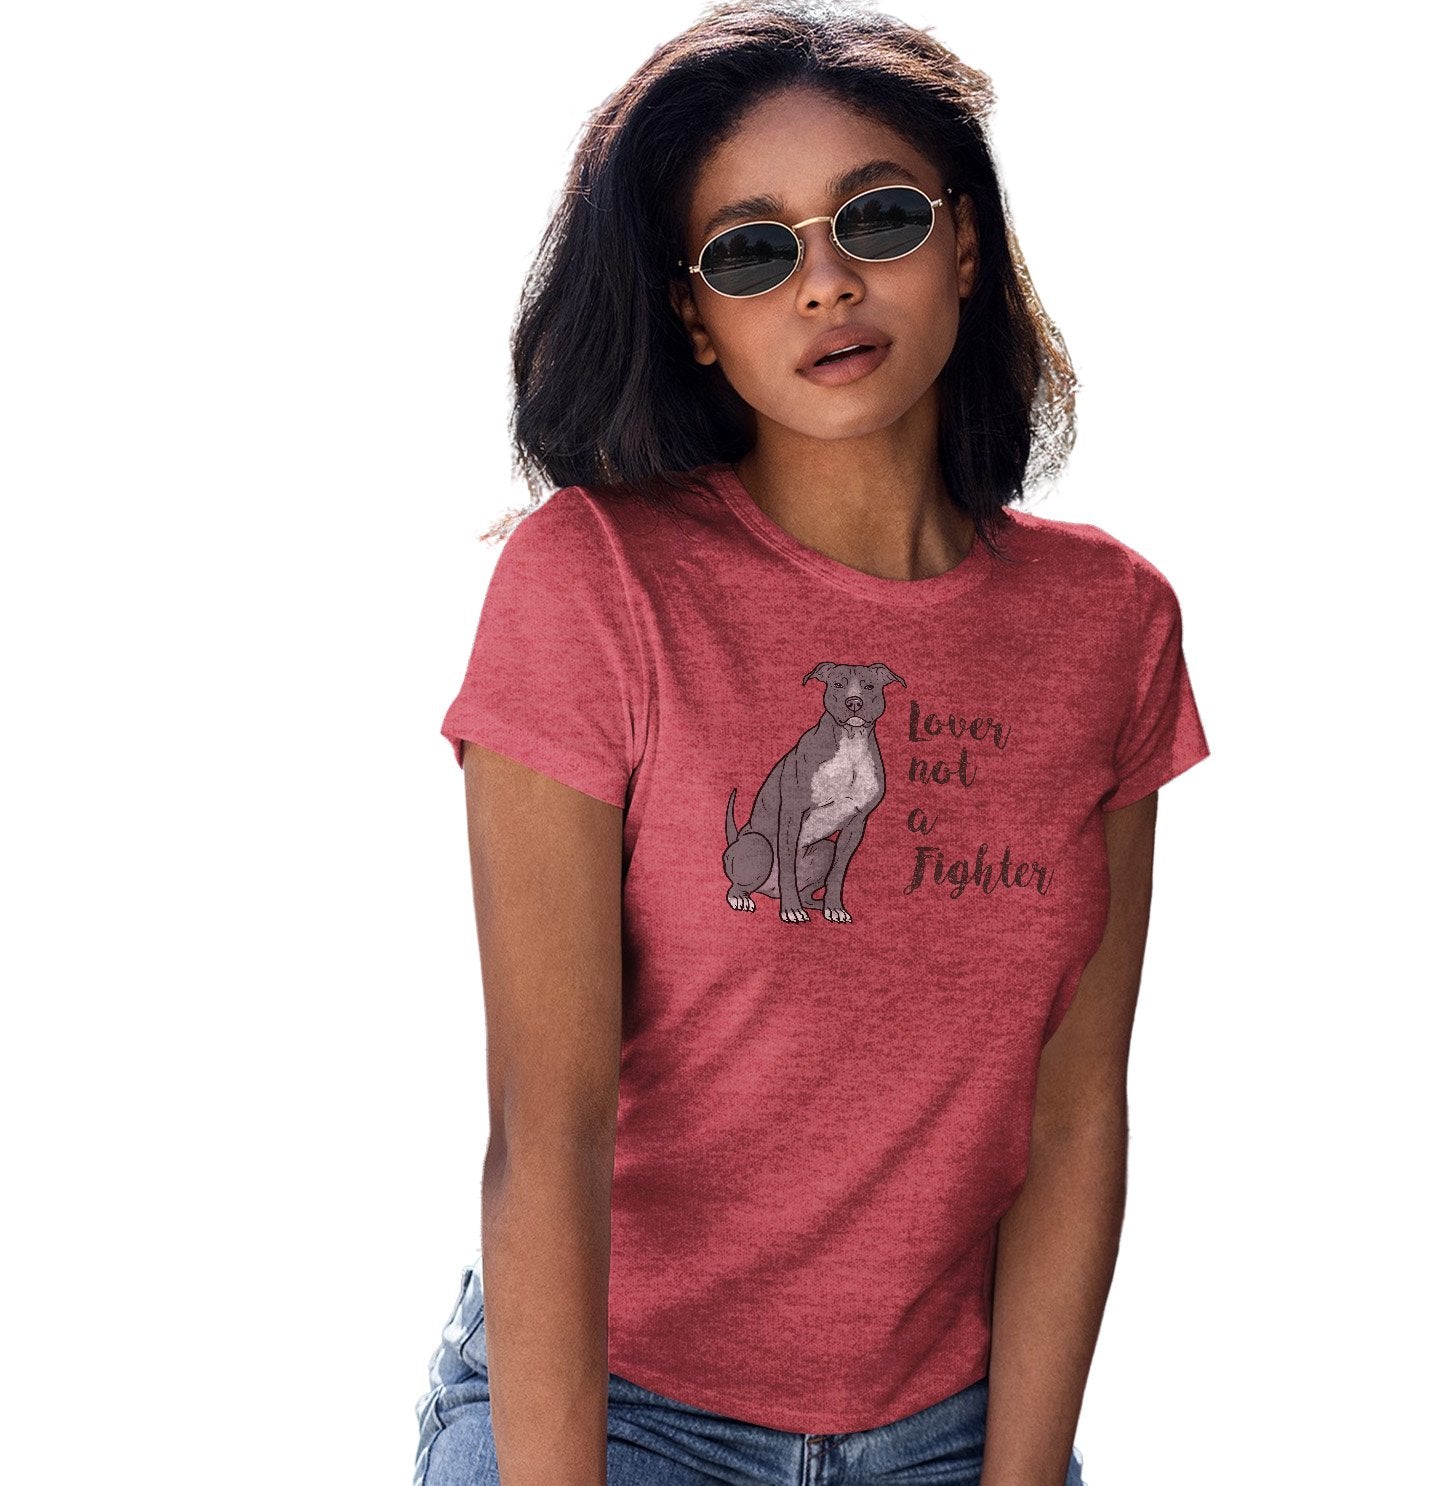 Grey Pit Bull Lover Not Fighter - Women's Tri-Blend T-Shirt